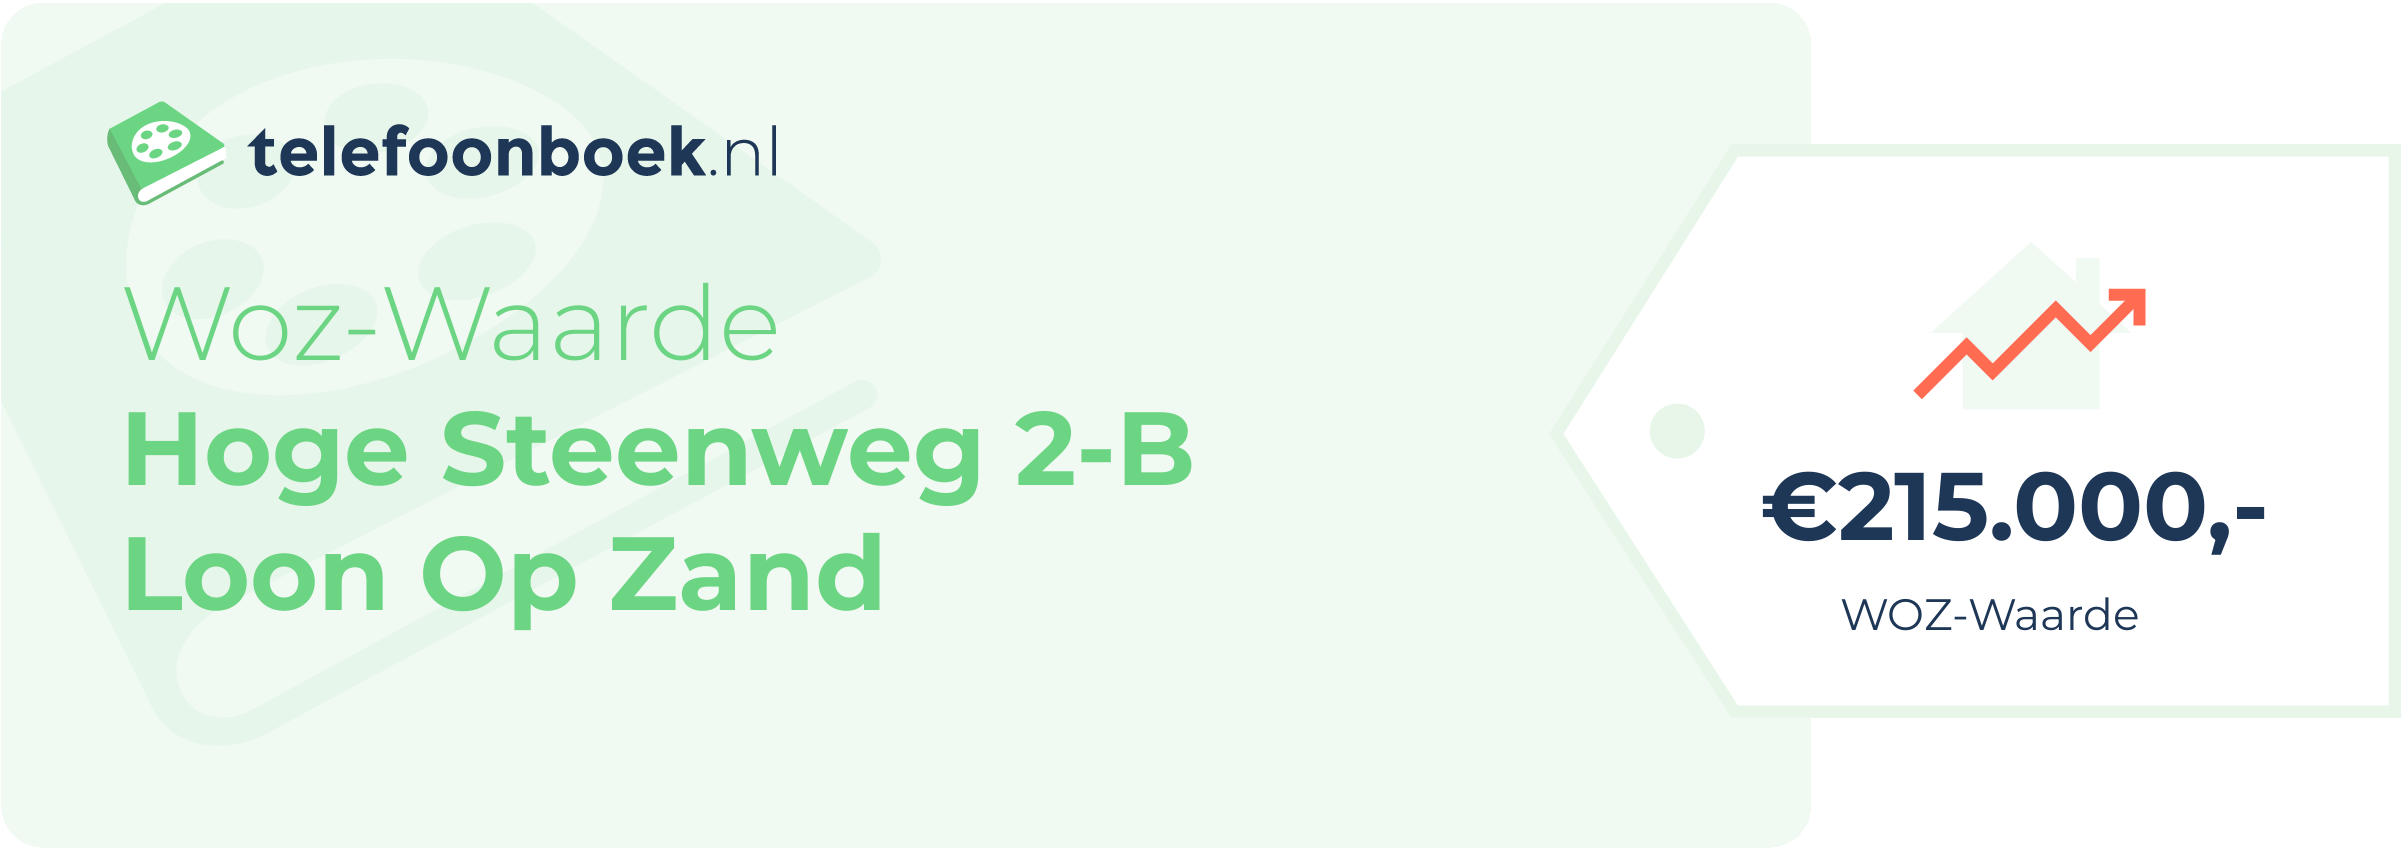 WOZ-waarde Hoge Steenweg 2-B Loon Op Zand